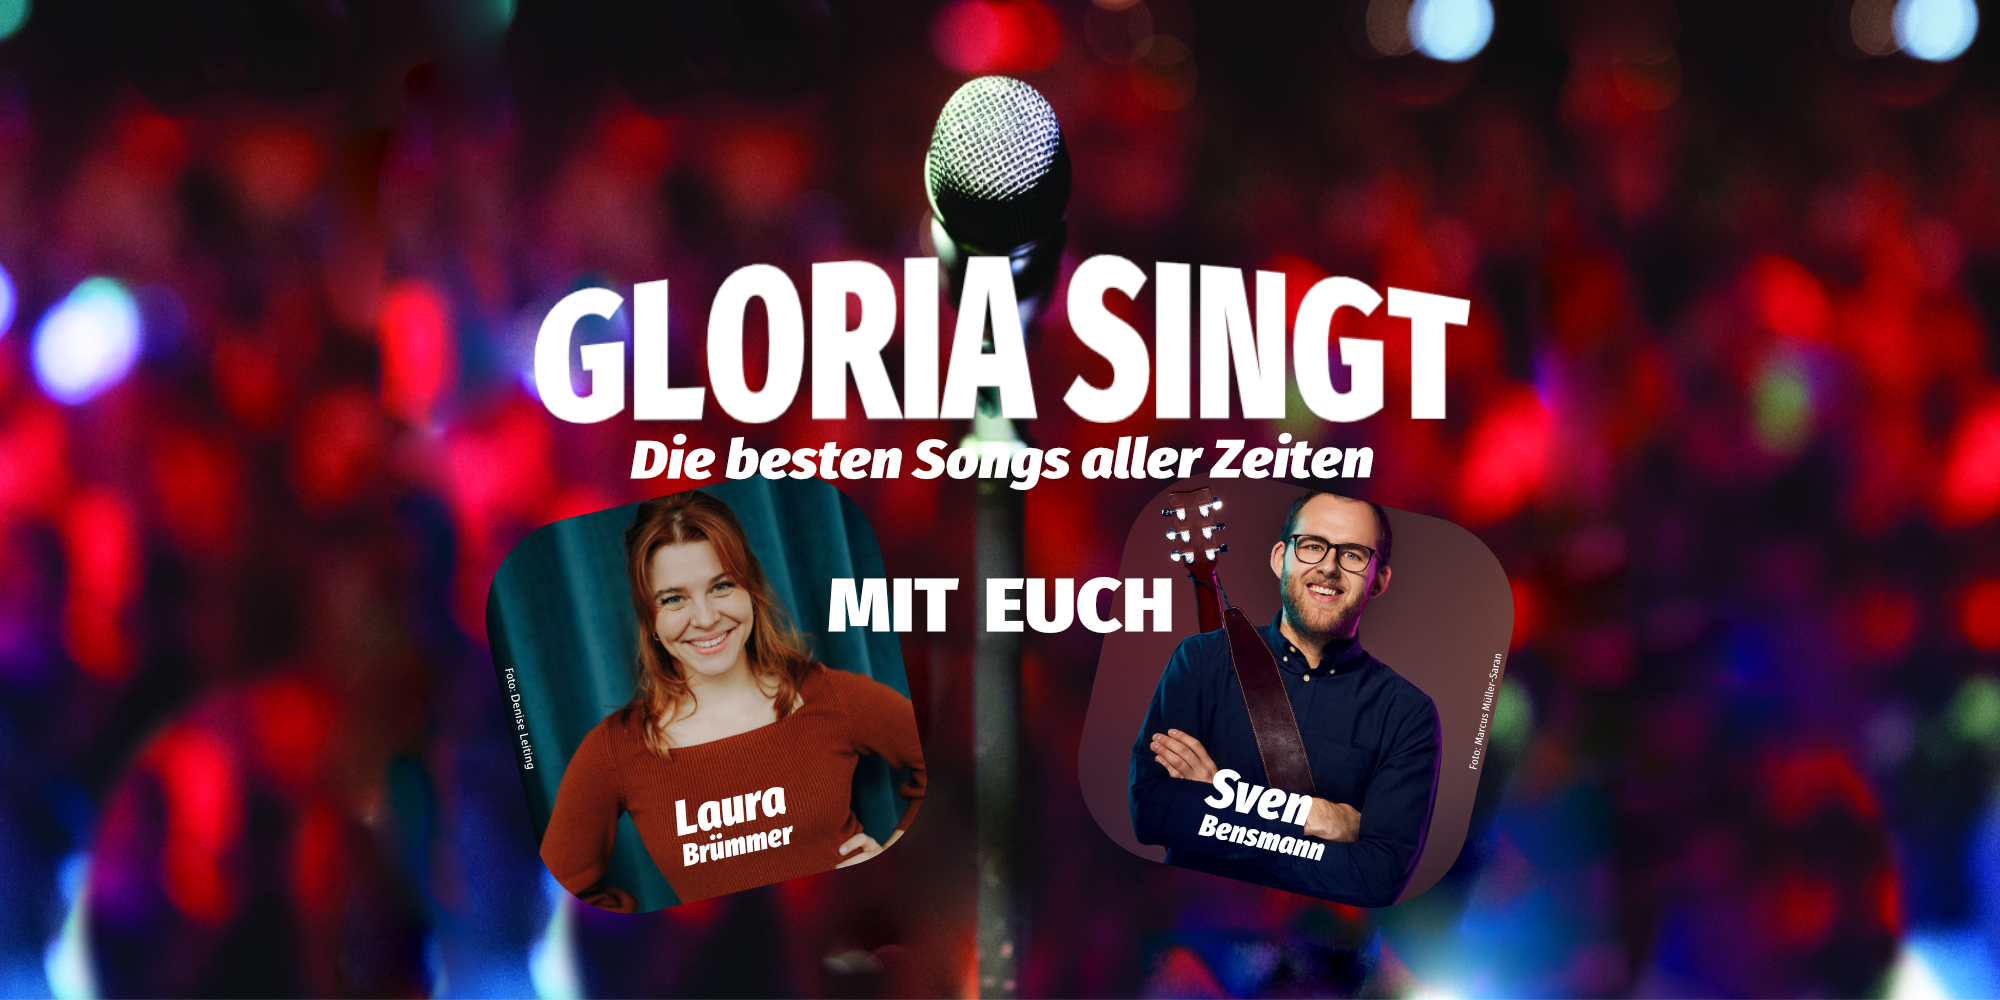 GLORIA singt - mit Laura Brmmer & Sven Bensmann